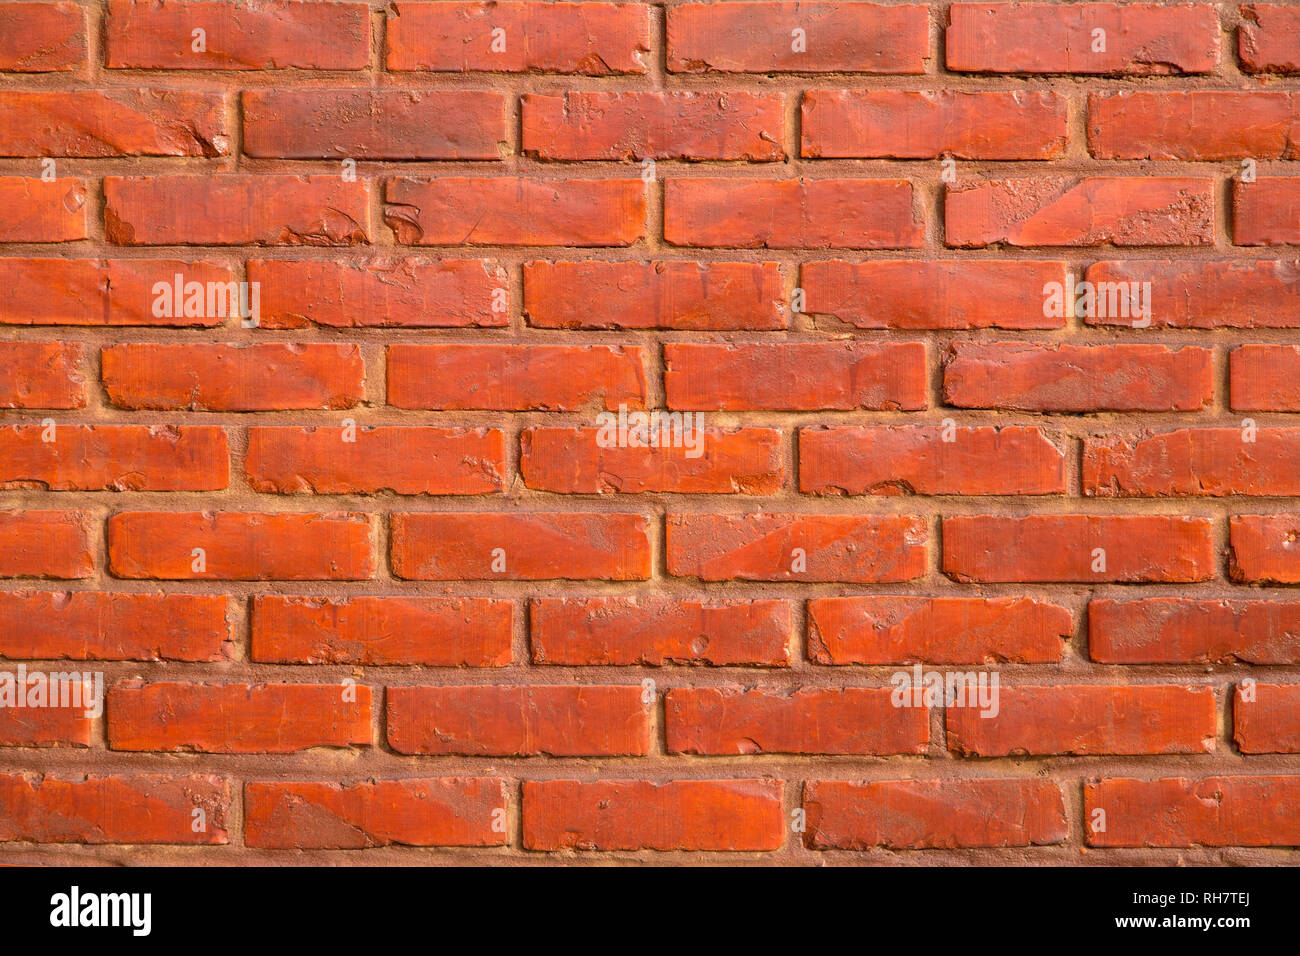 Brick wall background Stock Photo